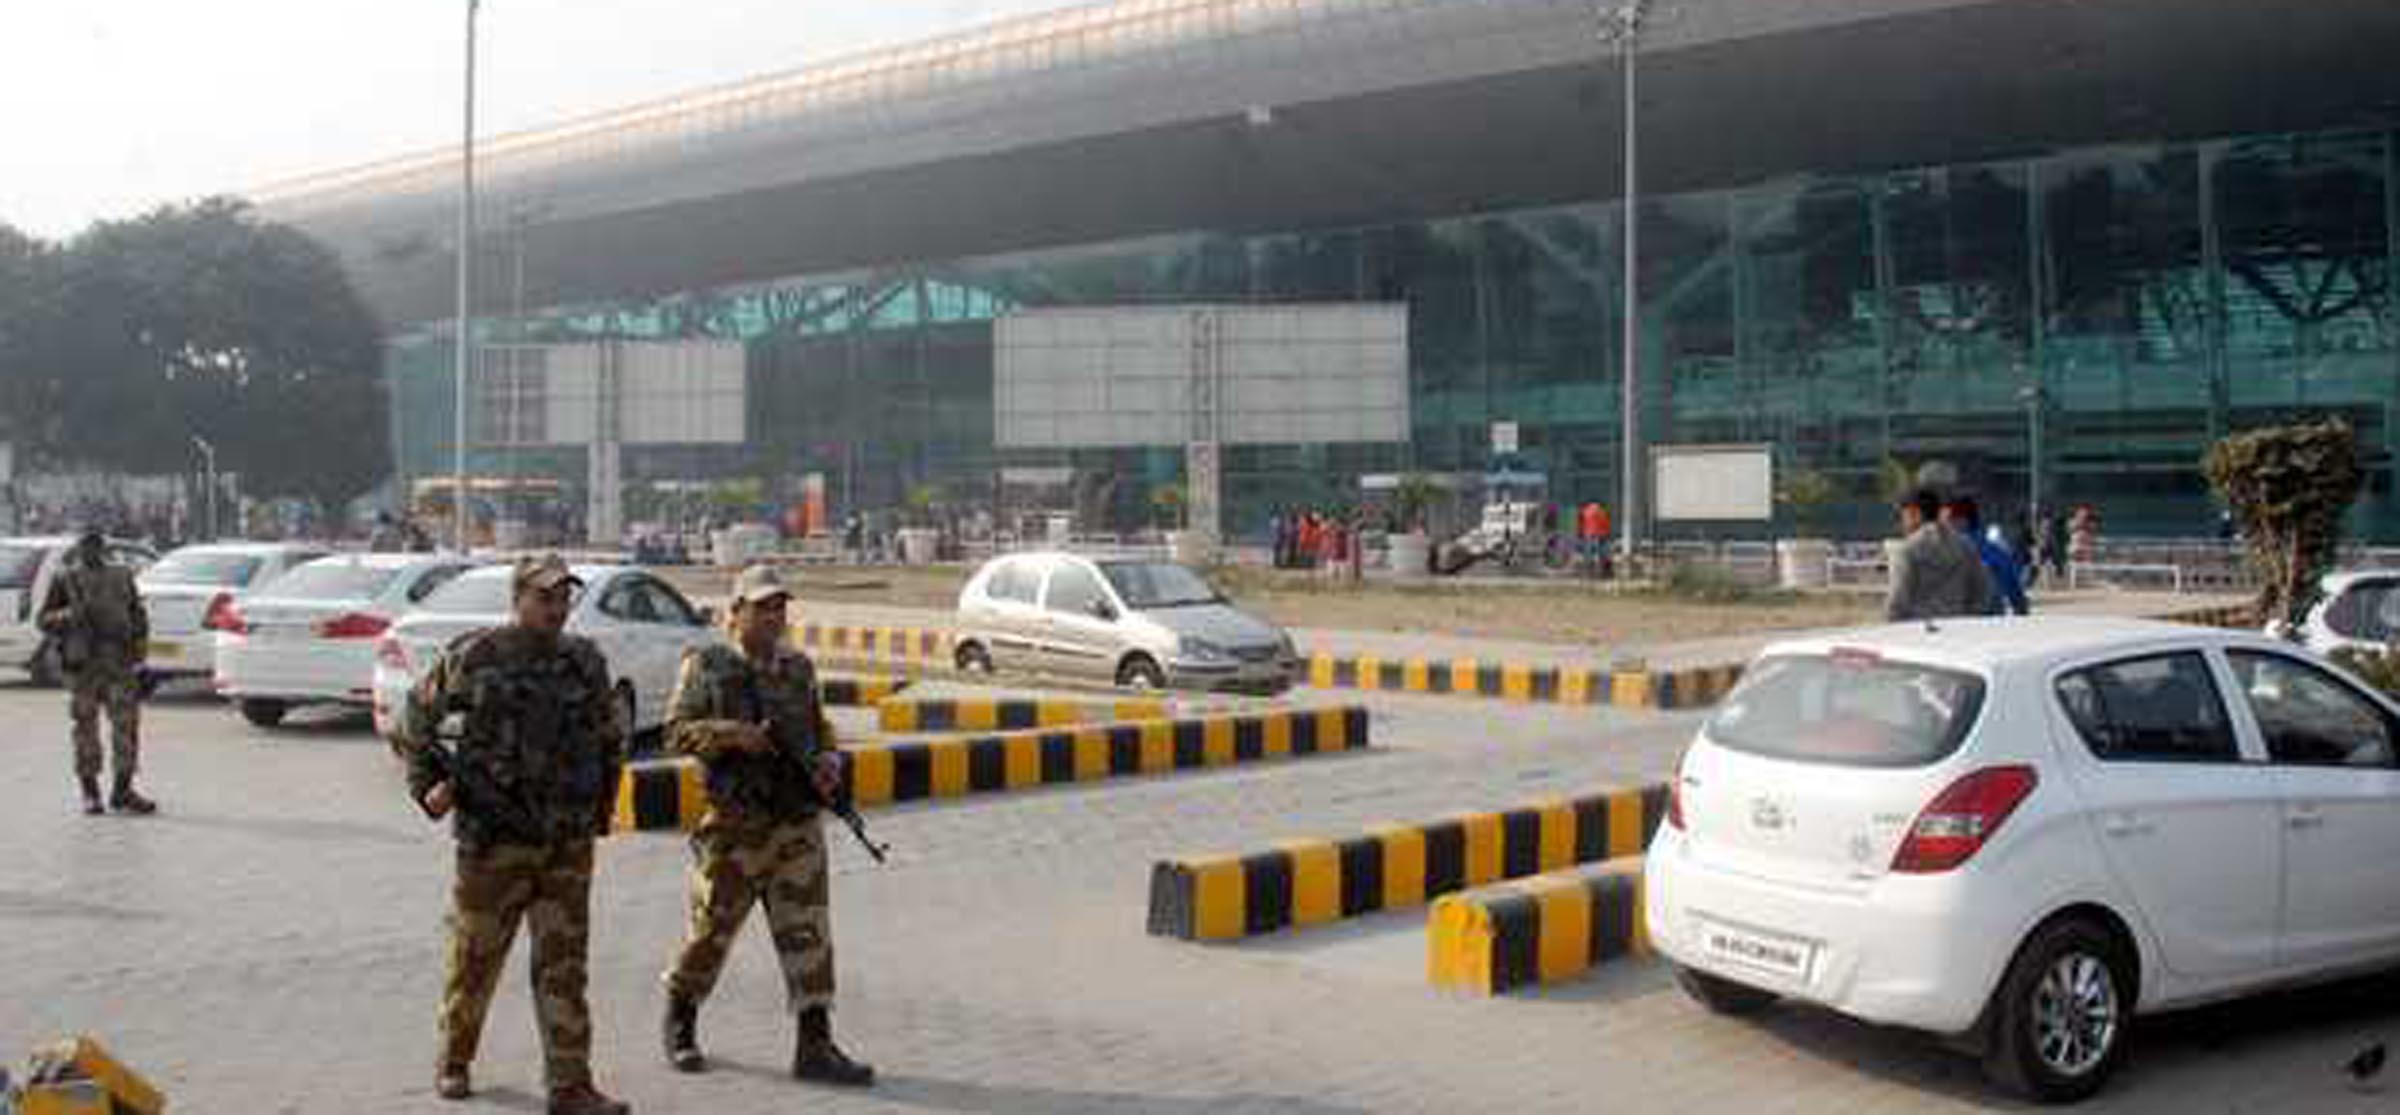 Overcharging at Sri Guru Ram Dass Jee International Airport parking irks visitors